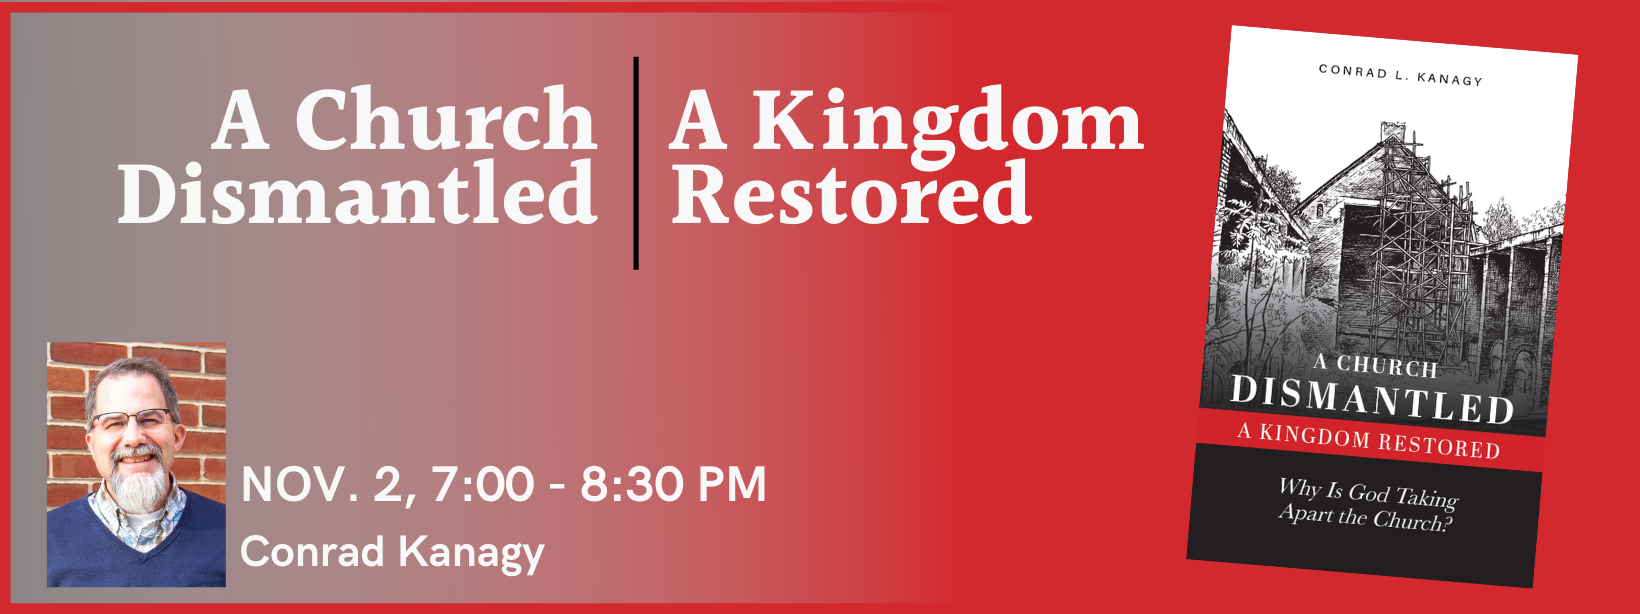 A Church Dismantled – a Kingdom Restored